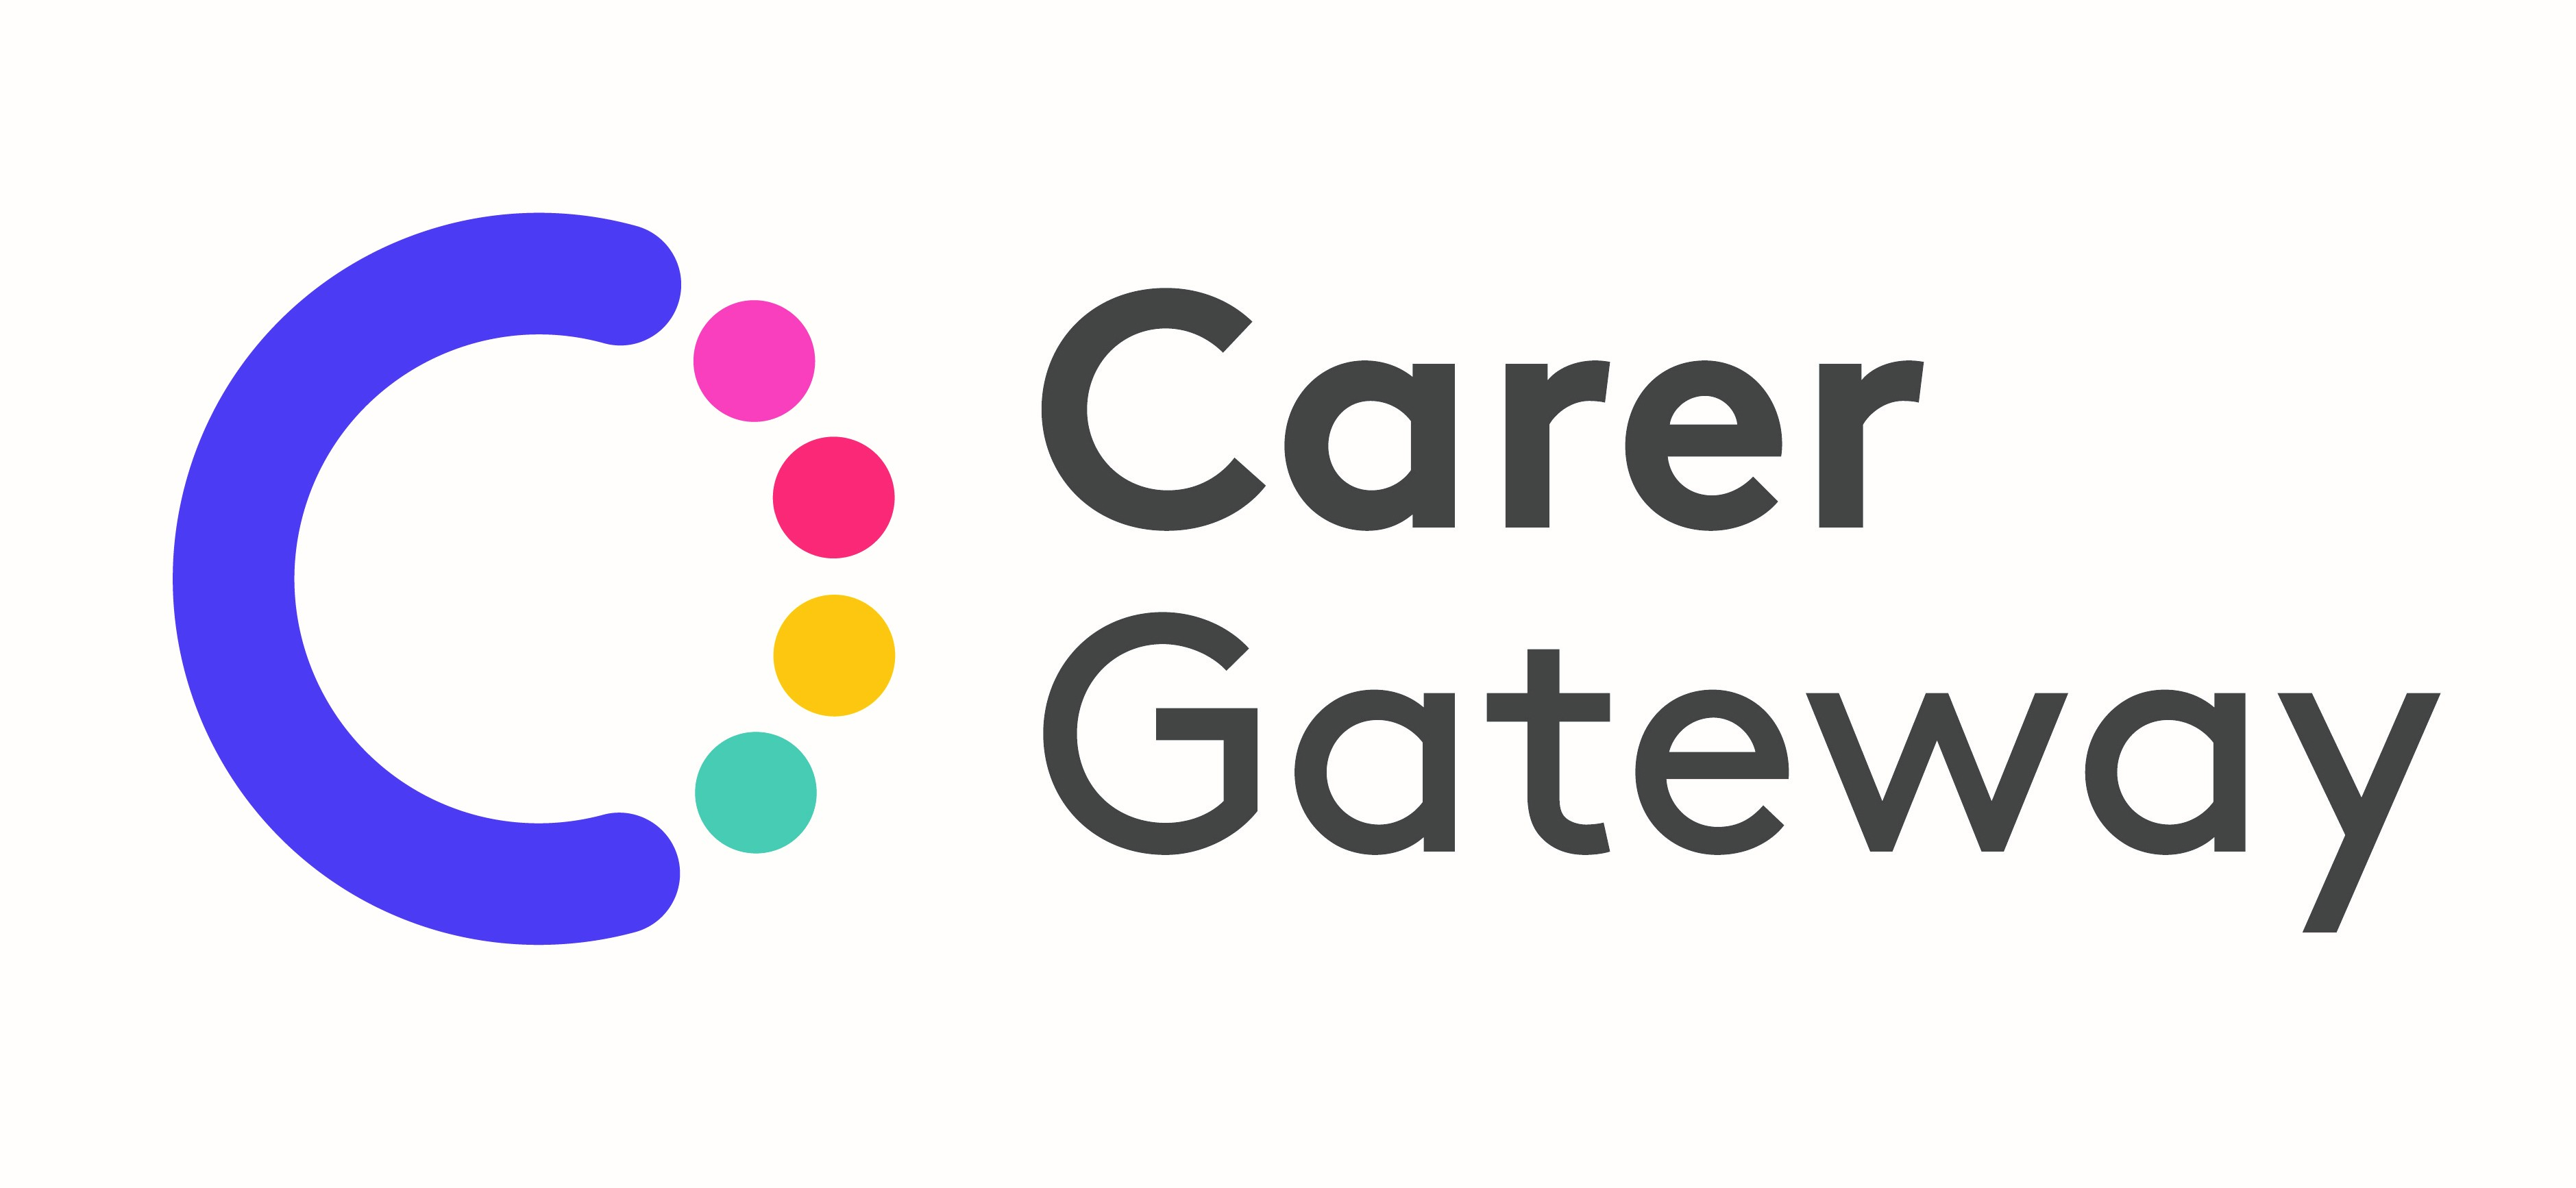 Carer Gateway logo